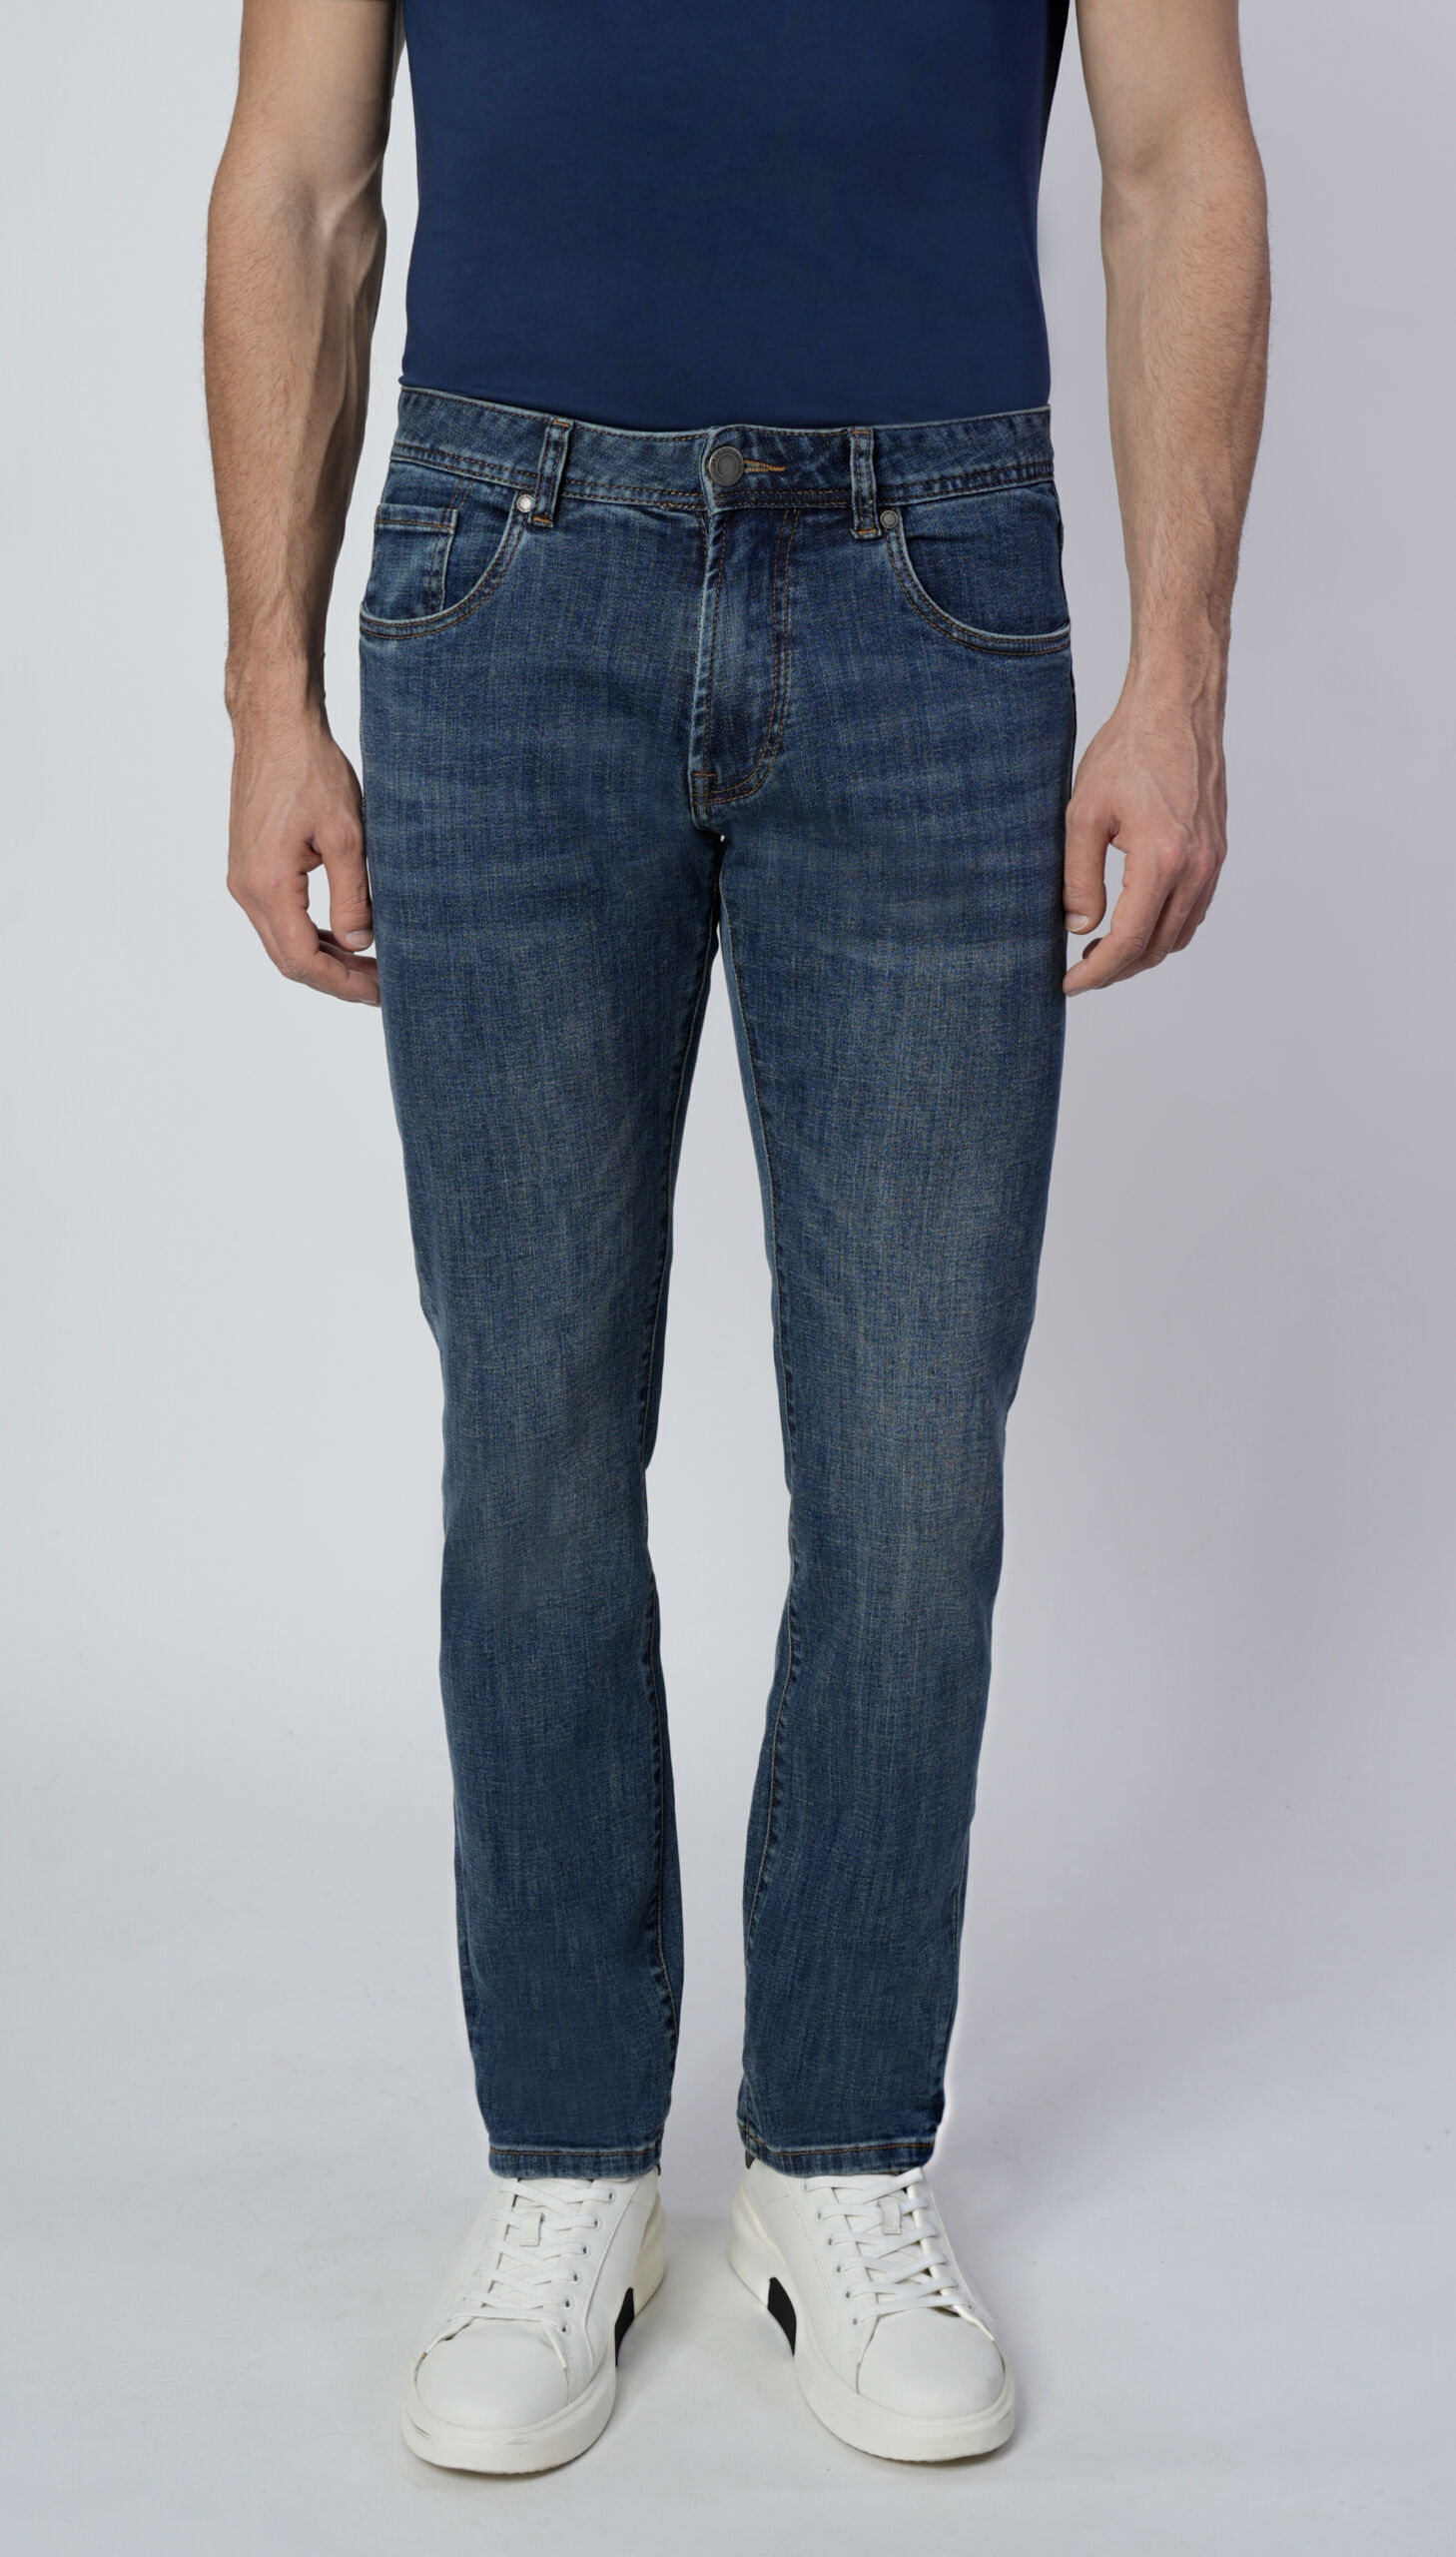 Berga 1 scaled 1st american jeans fashion uomo 5 tasche colore blu medio denim - 99% cotton 1% elastan denim 1150 oz